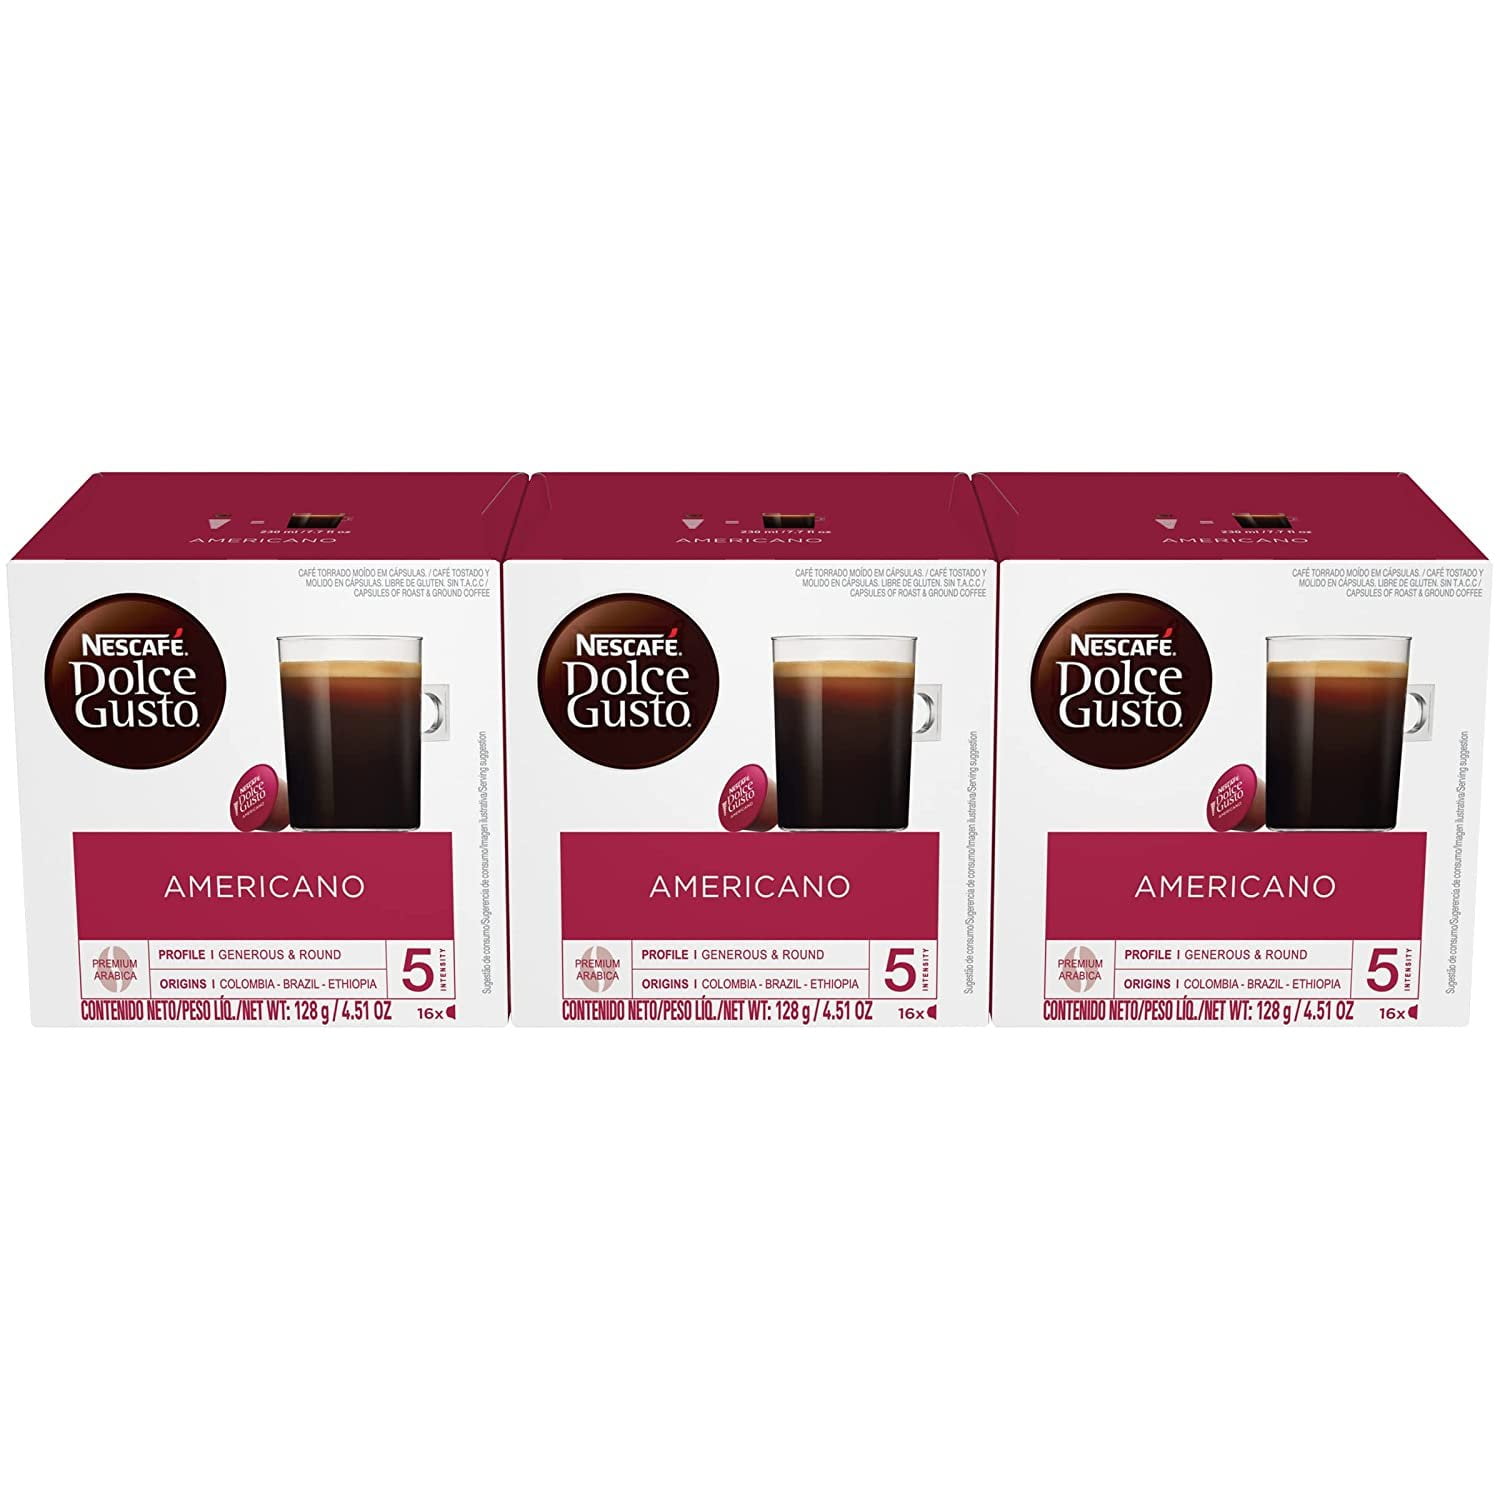 Nescafé Dolce Gusto Espresso Ristretto Coffee 112g - Coffee Pods & Capsules  - Coffee - Tea, Coffee & Hot Chocolate - Pantry - Products - Supermercado  Apolónia